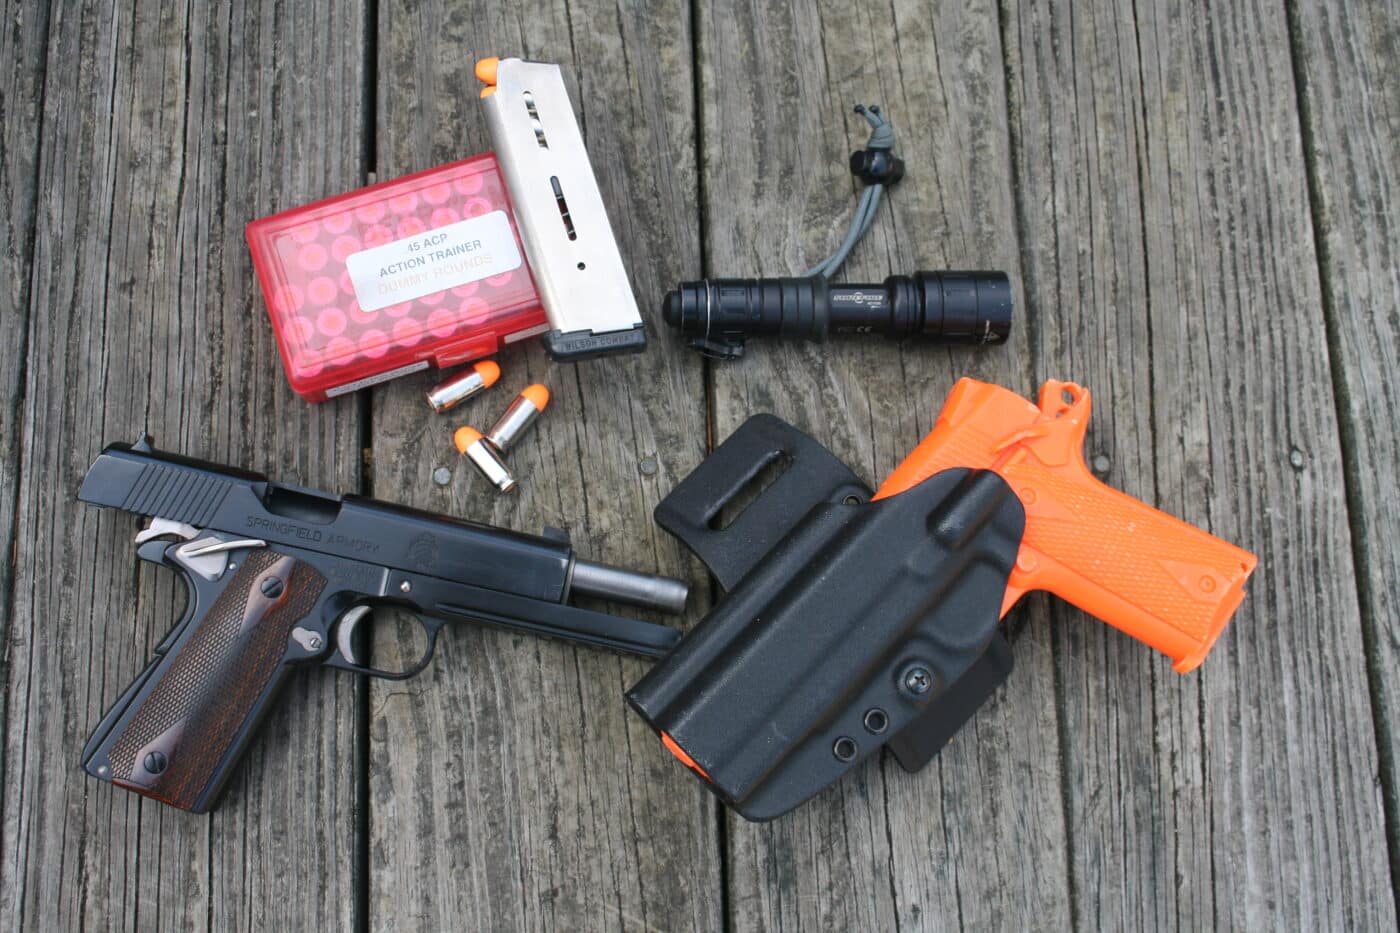 empty gun, inert trainer, dummy rounds and a flashlight